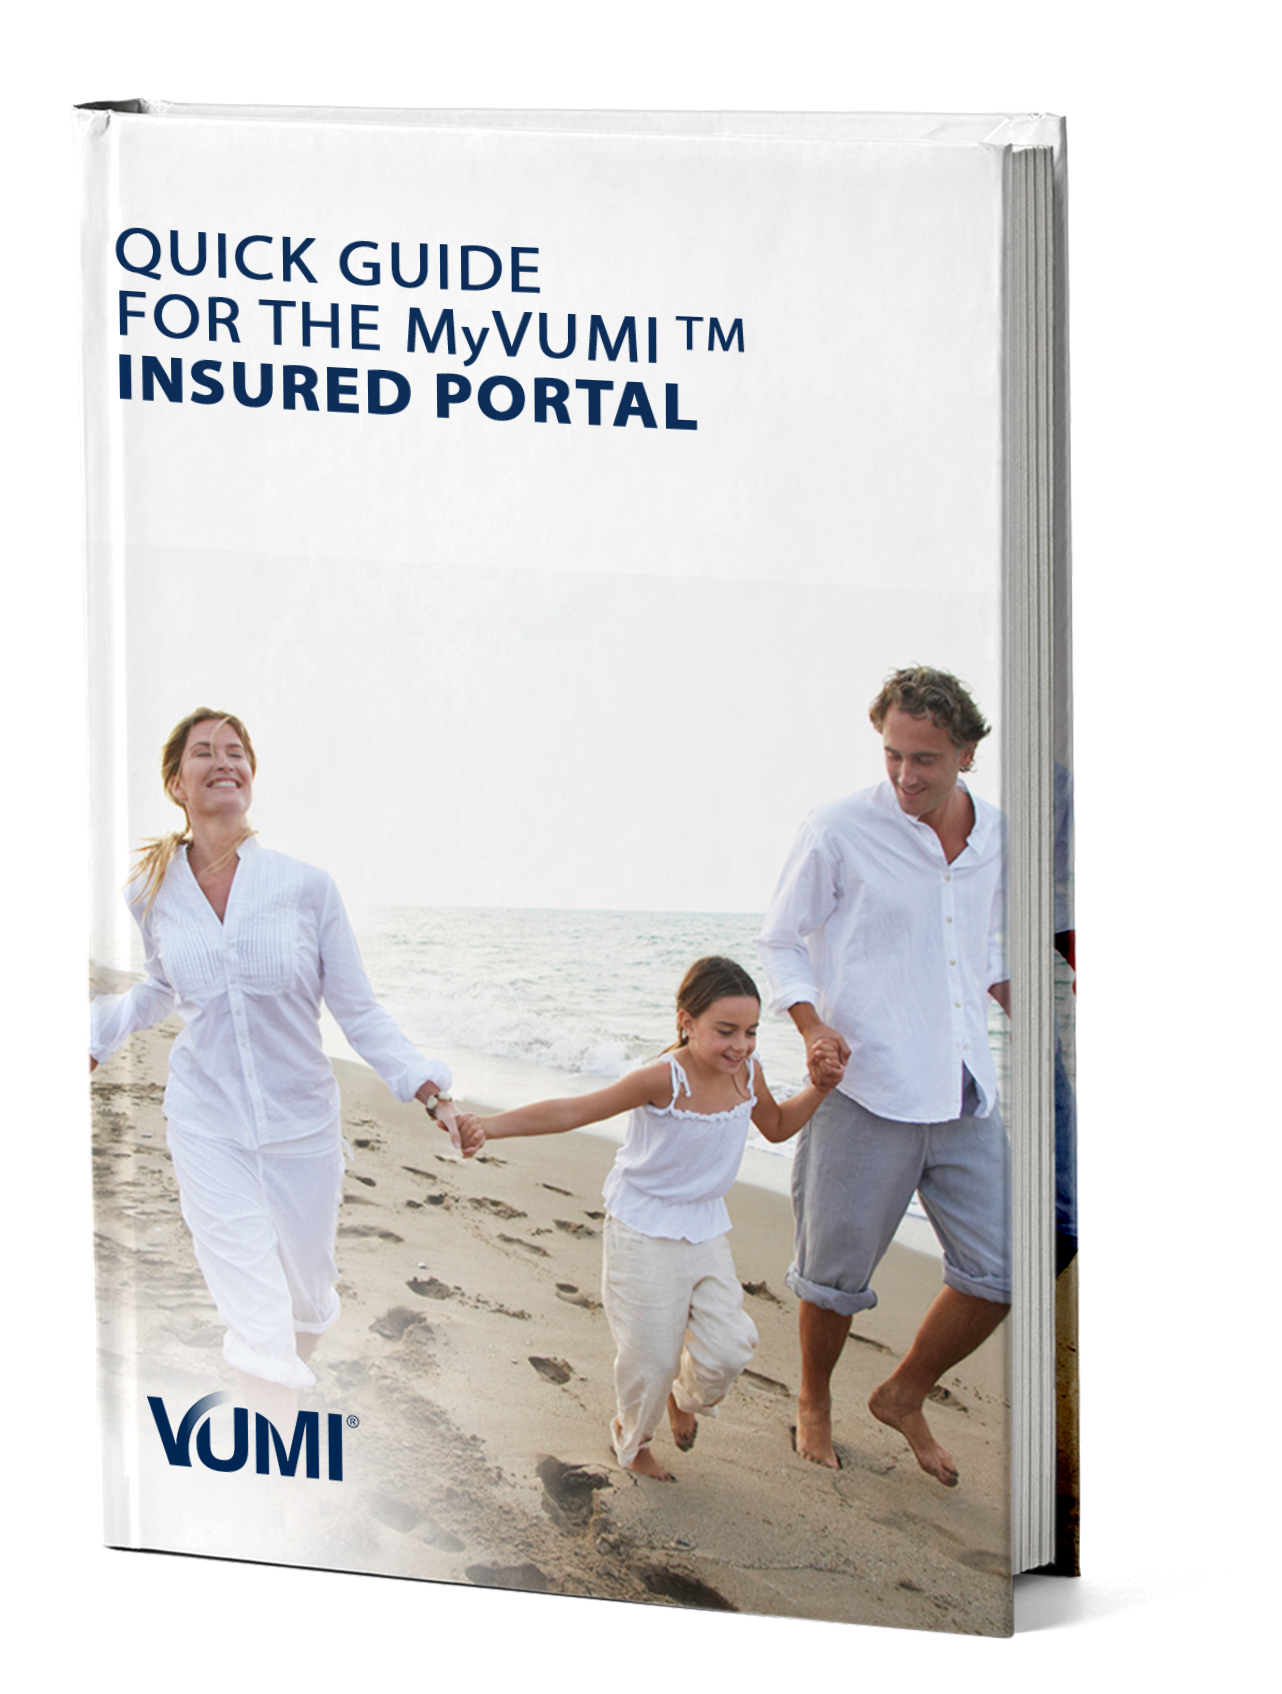 Quick guide for the myvumi™ insured portal